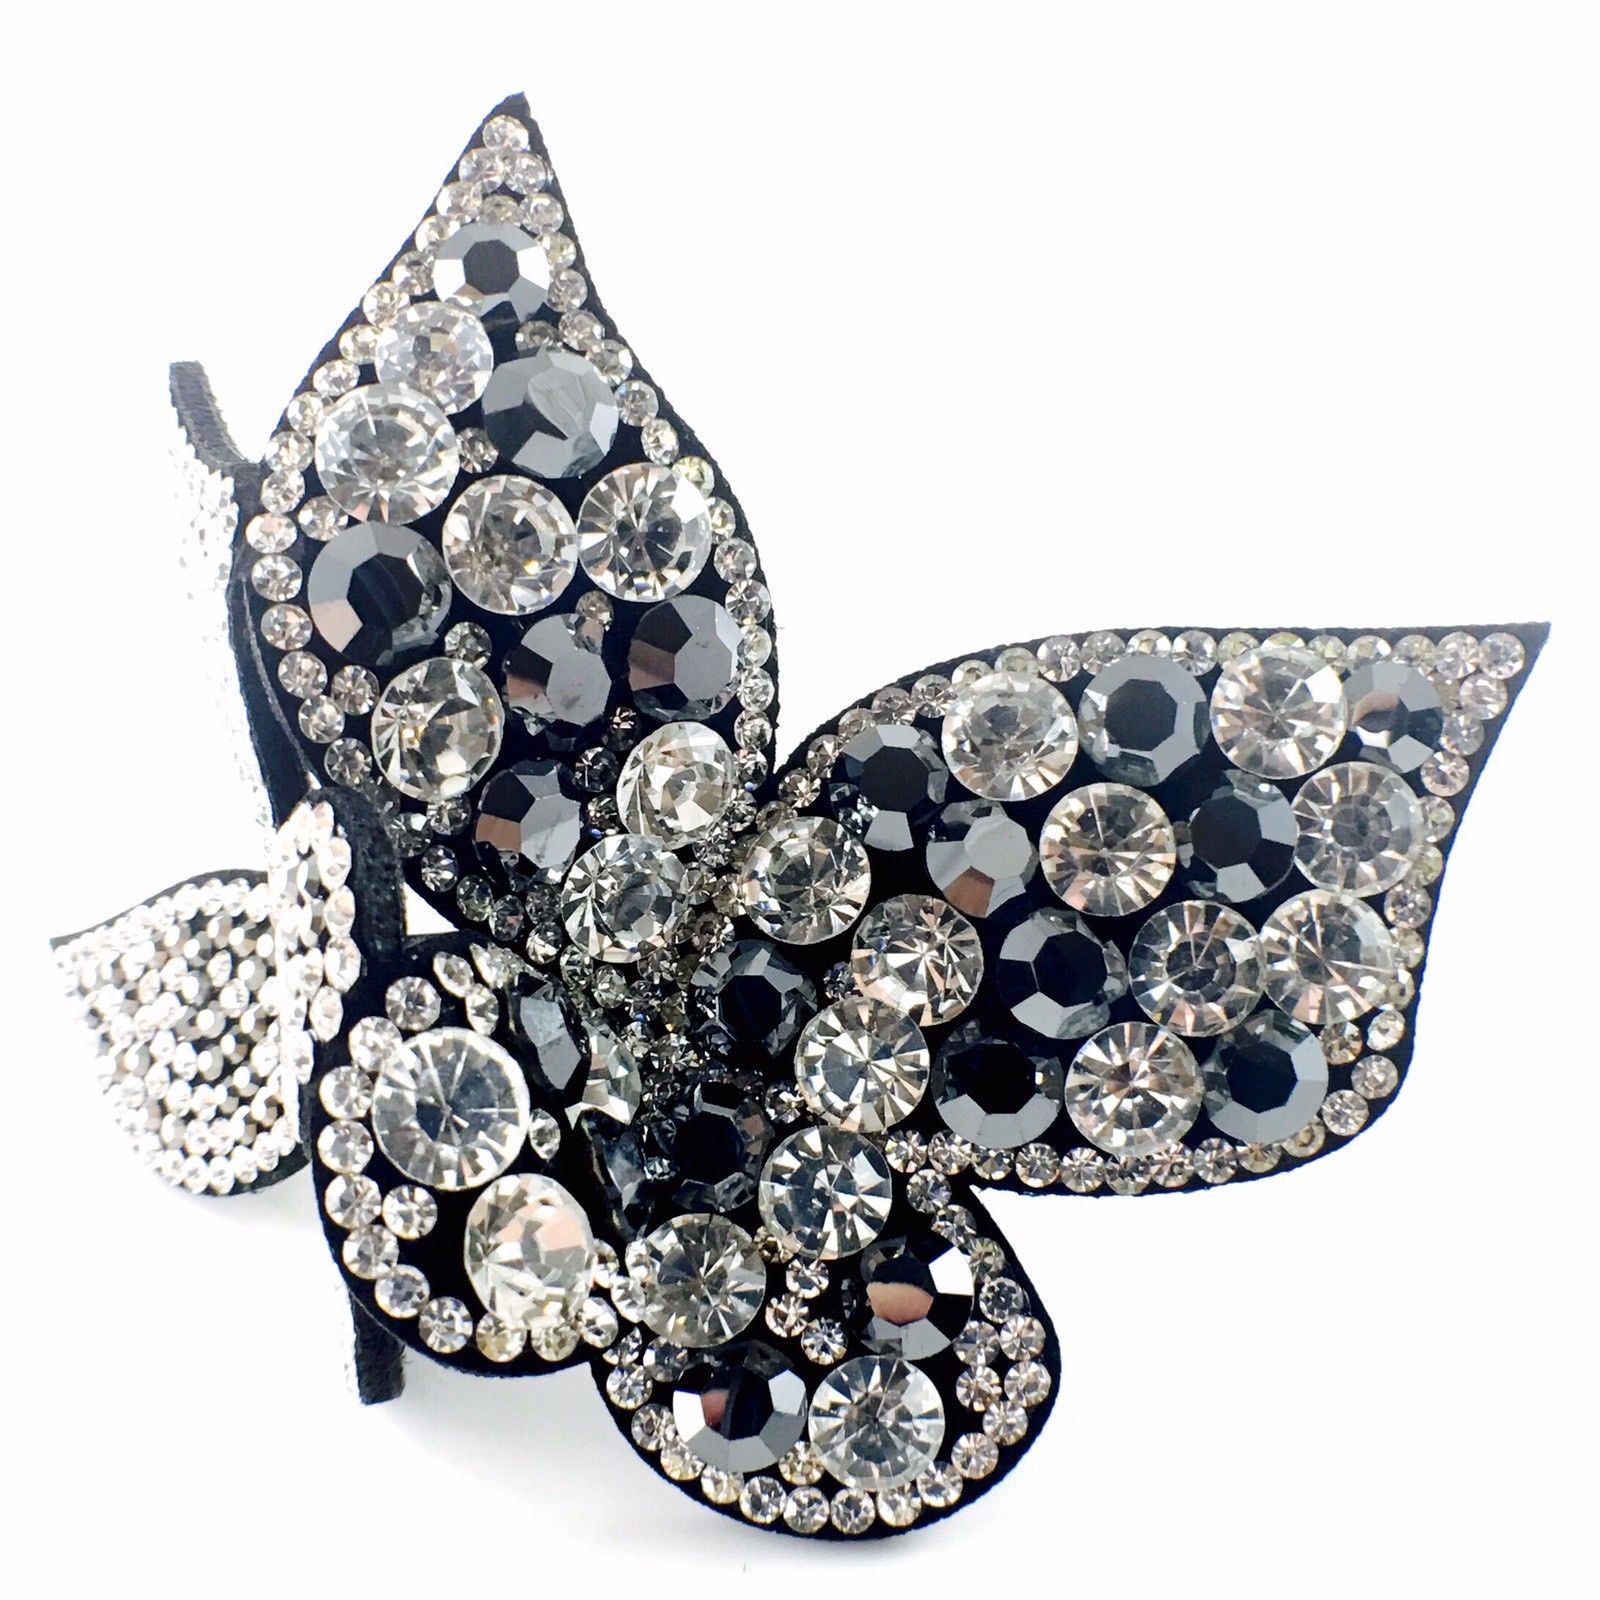 Butterfly Barrette Handmade use Swarovski Crystal Fabric base Silver Gray, Barrette - MOGHANT